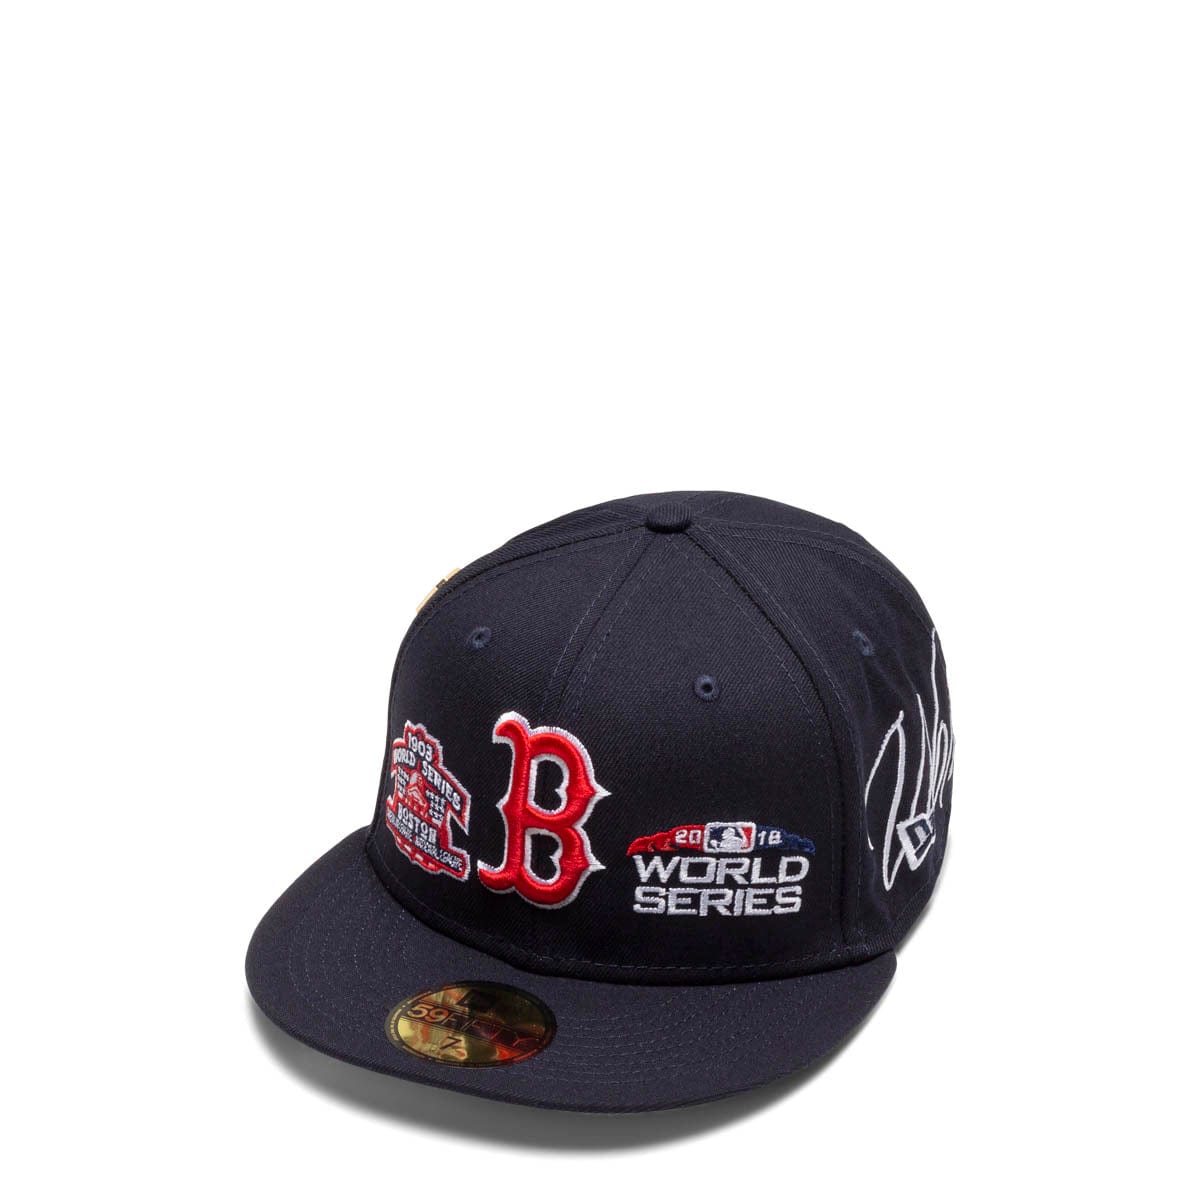 Boston Red Sox baseball American League script Champions hat cap